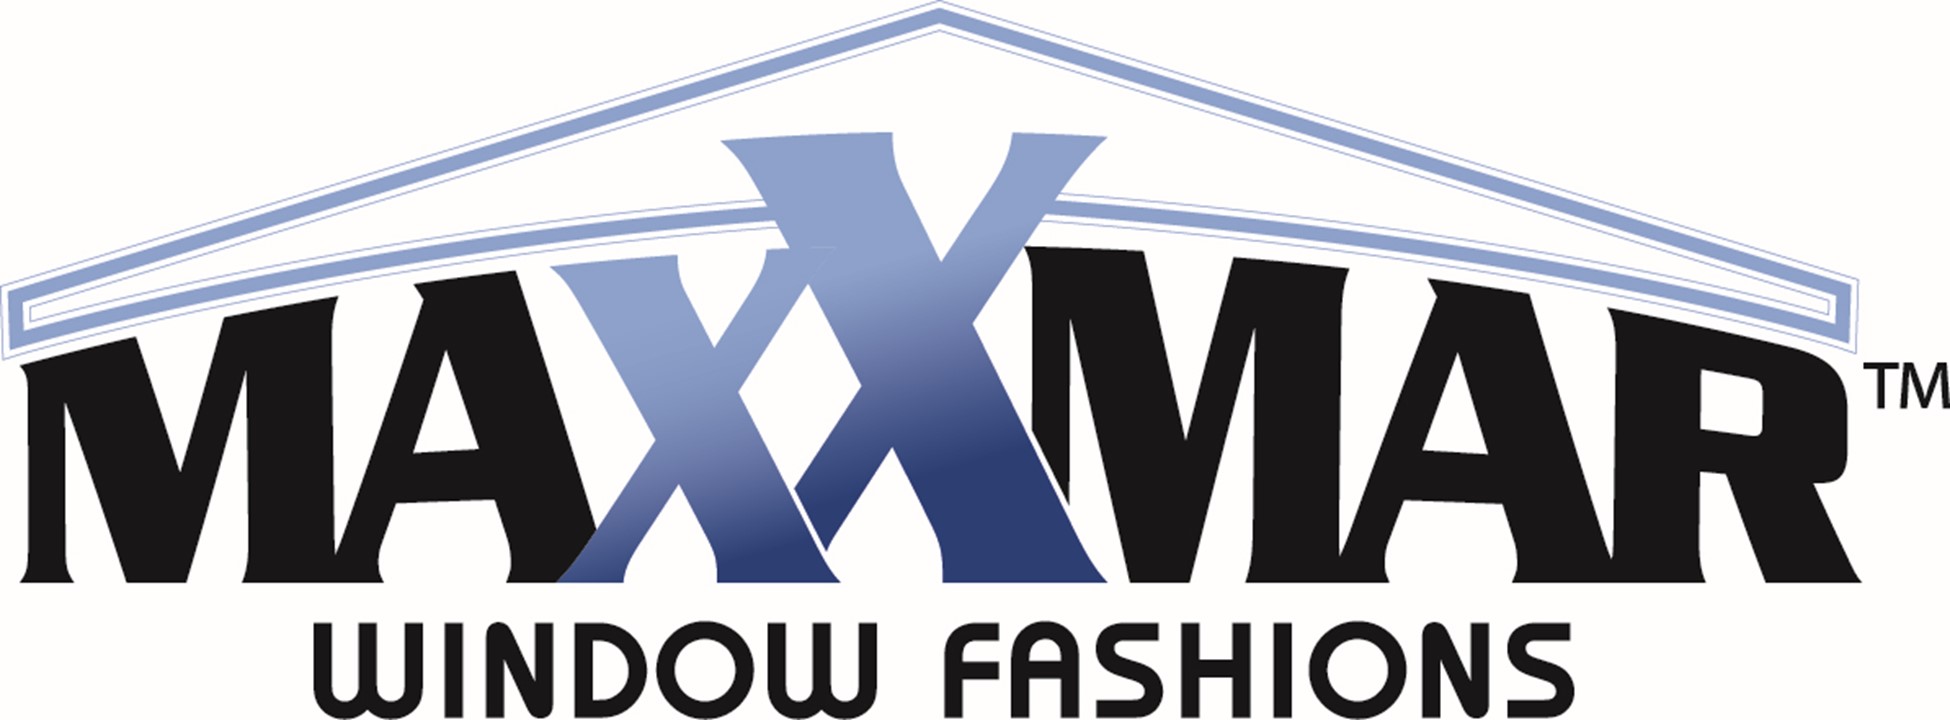 Maxxmar-Logo